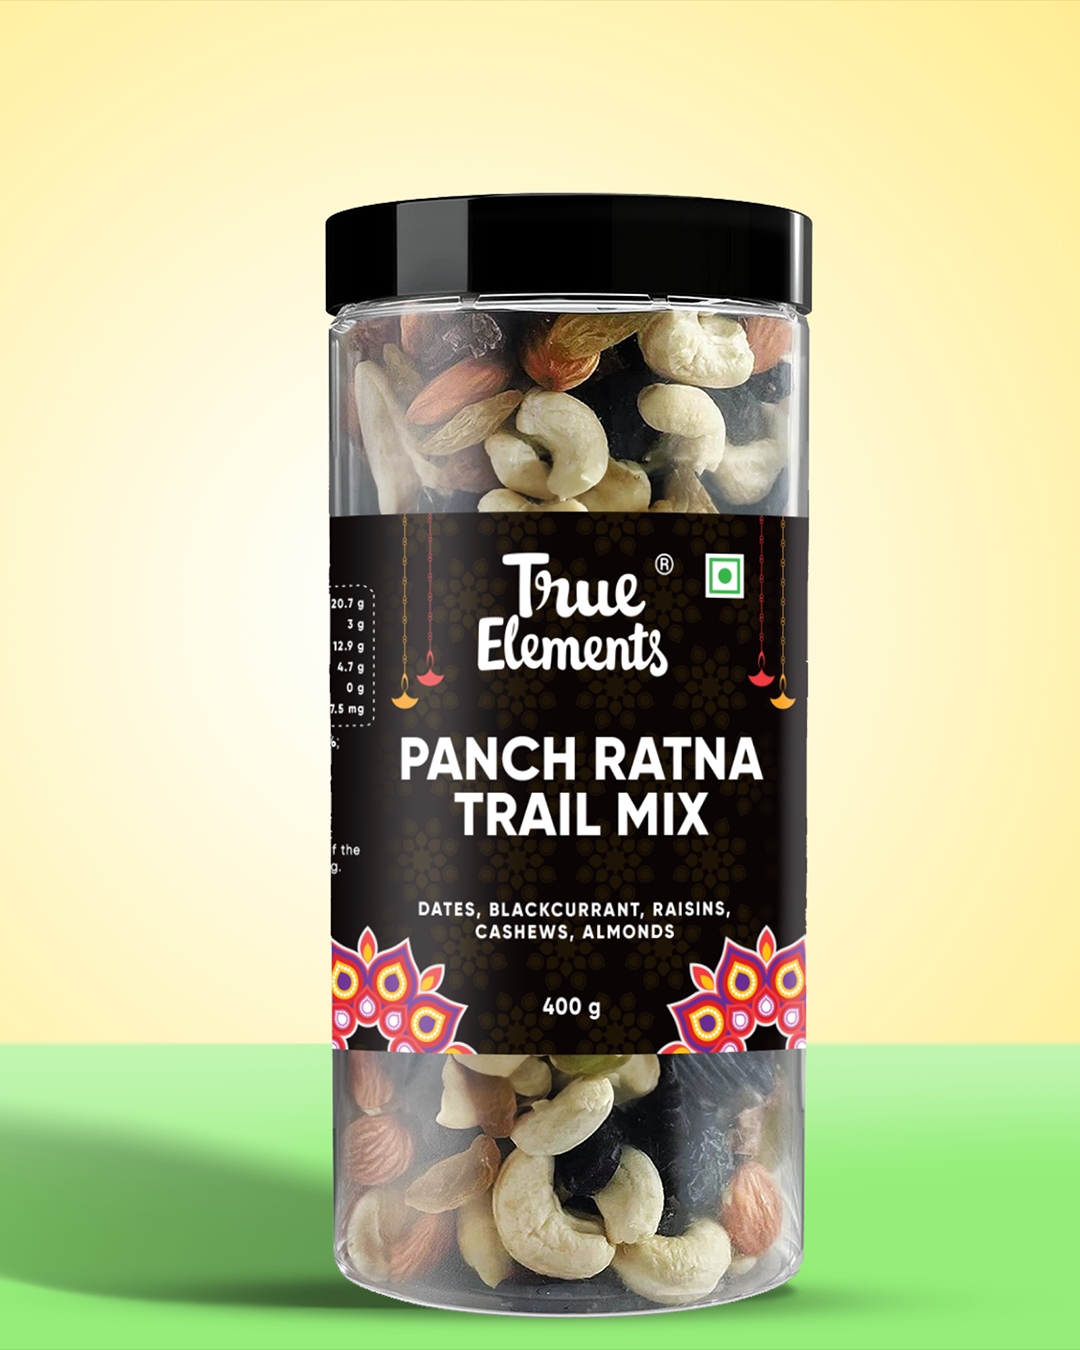 True Elements Panch Ratna Trail Mix